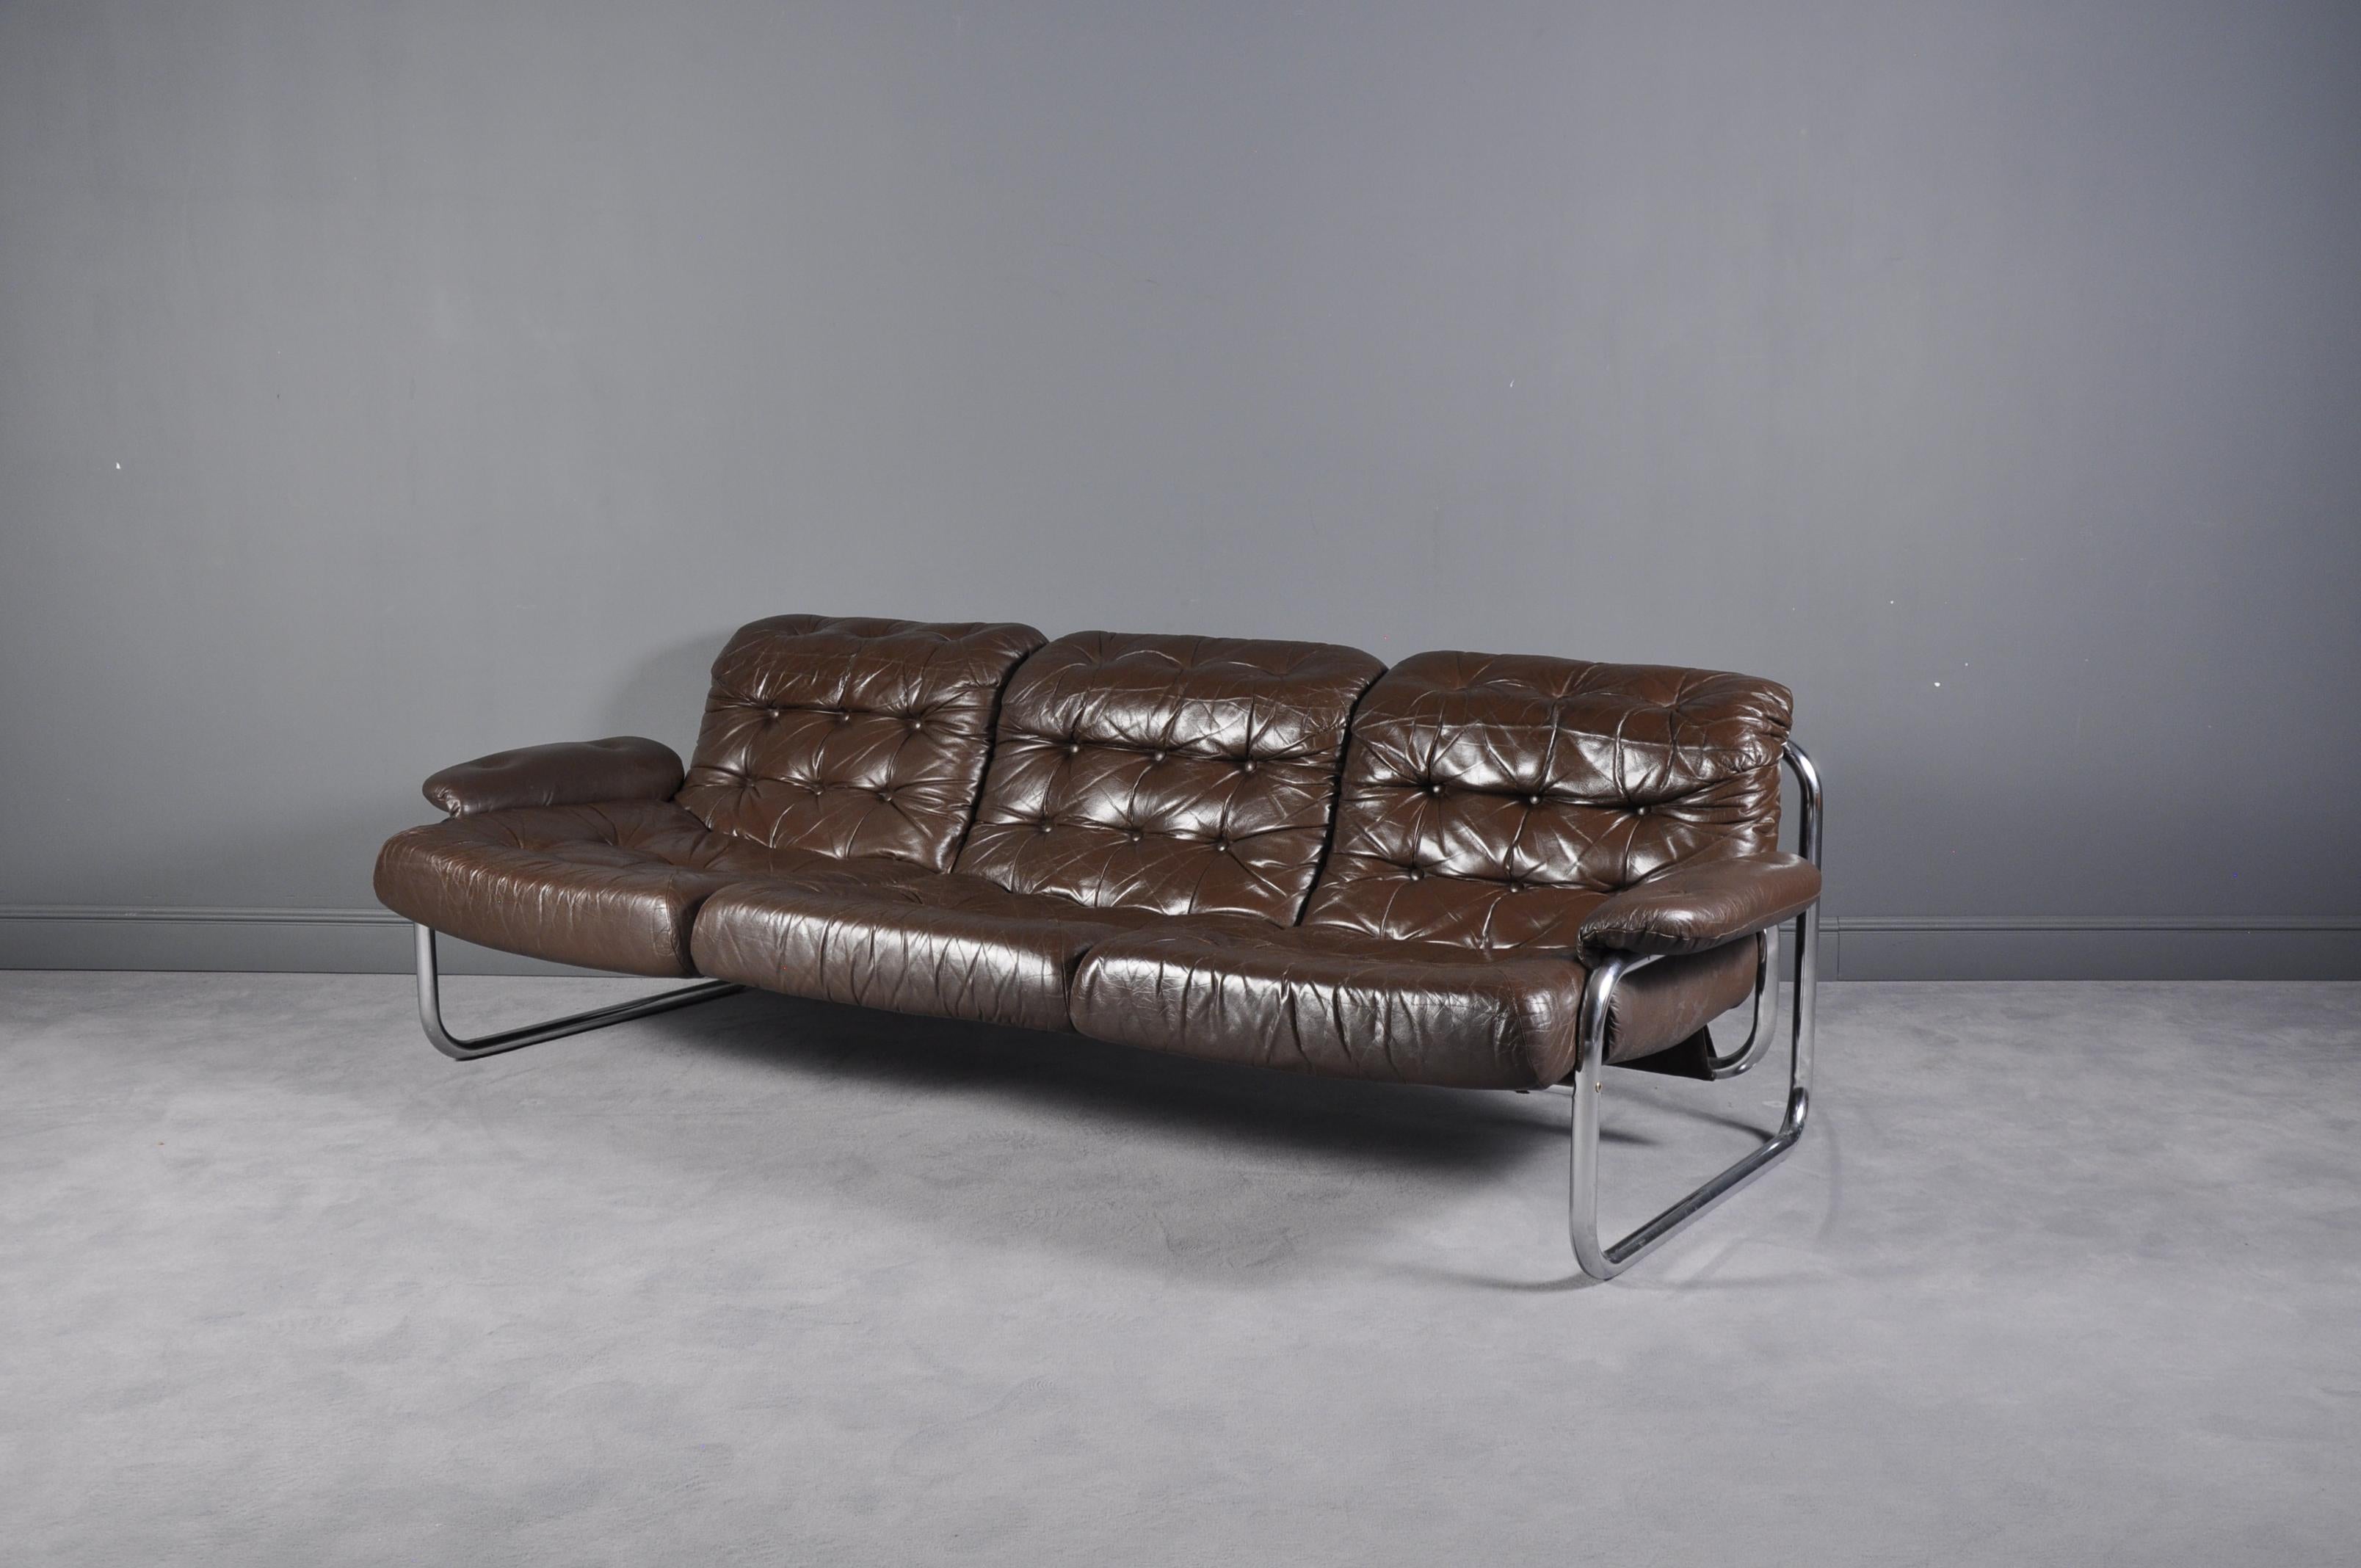 Swedish, 1970s tubular metal framed lounge sofa with original brown tufted cushion and armrests. Produced by Ikea, model Troligen, designed by Johan Bertil Häggström.